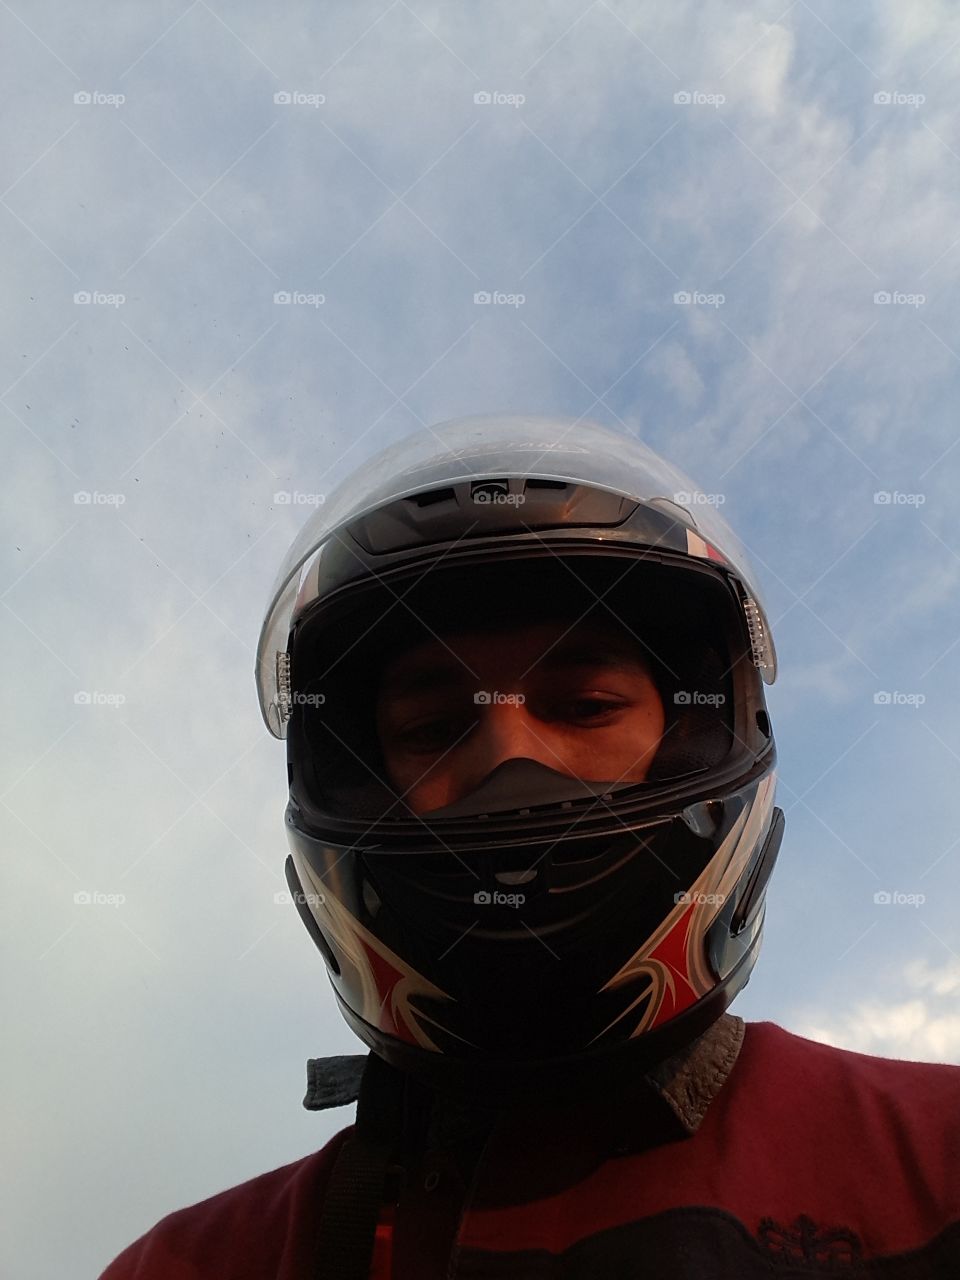 my photo in the helmet